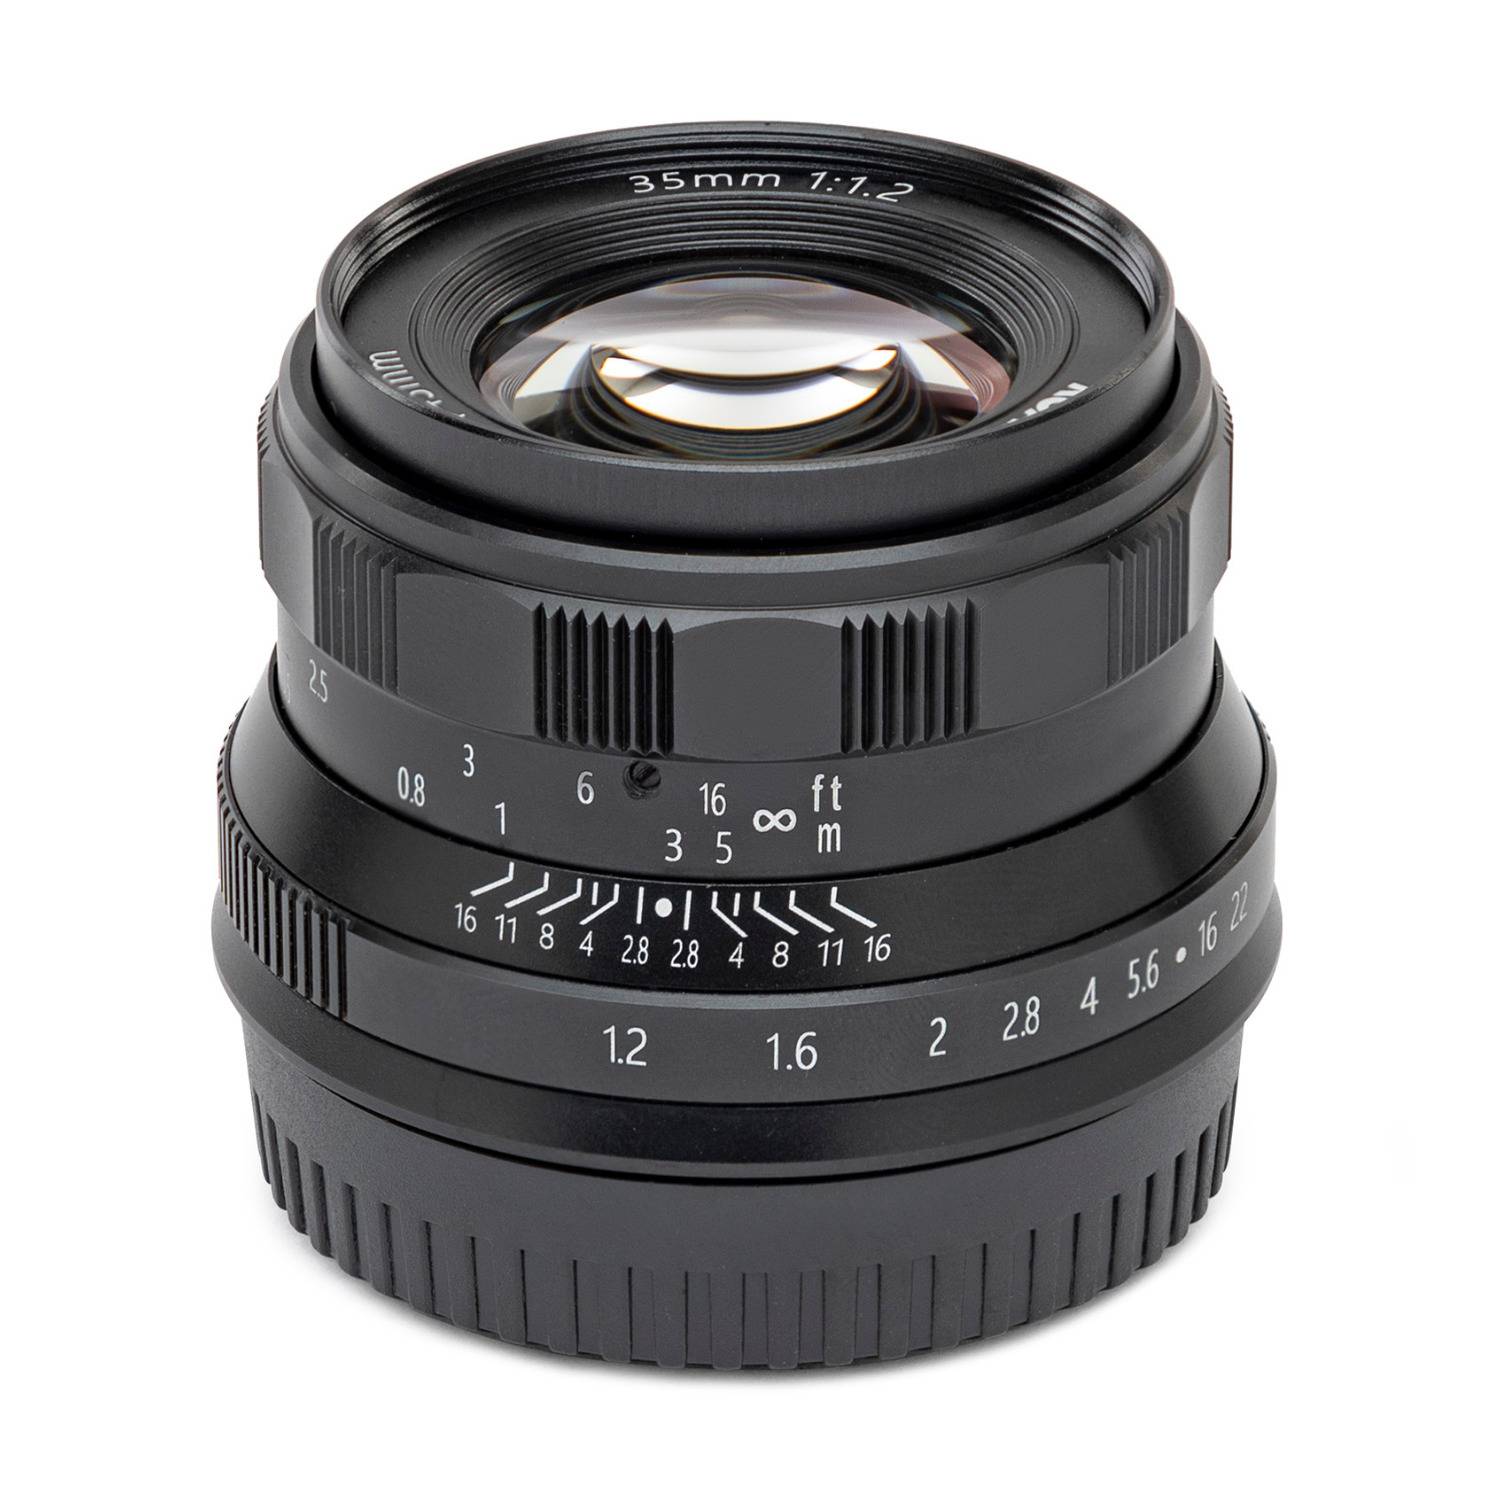 Koah Artisans Series 35mm f/1.2 Large Aperture Manual Focus Lens for Canon EOS-M Mount (Black)